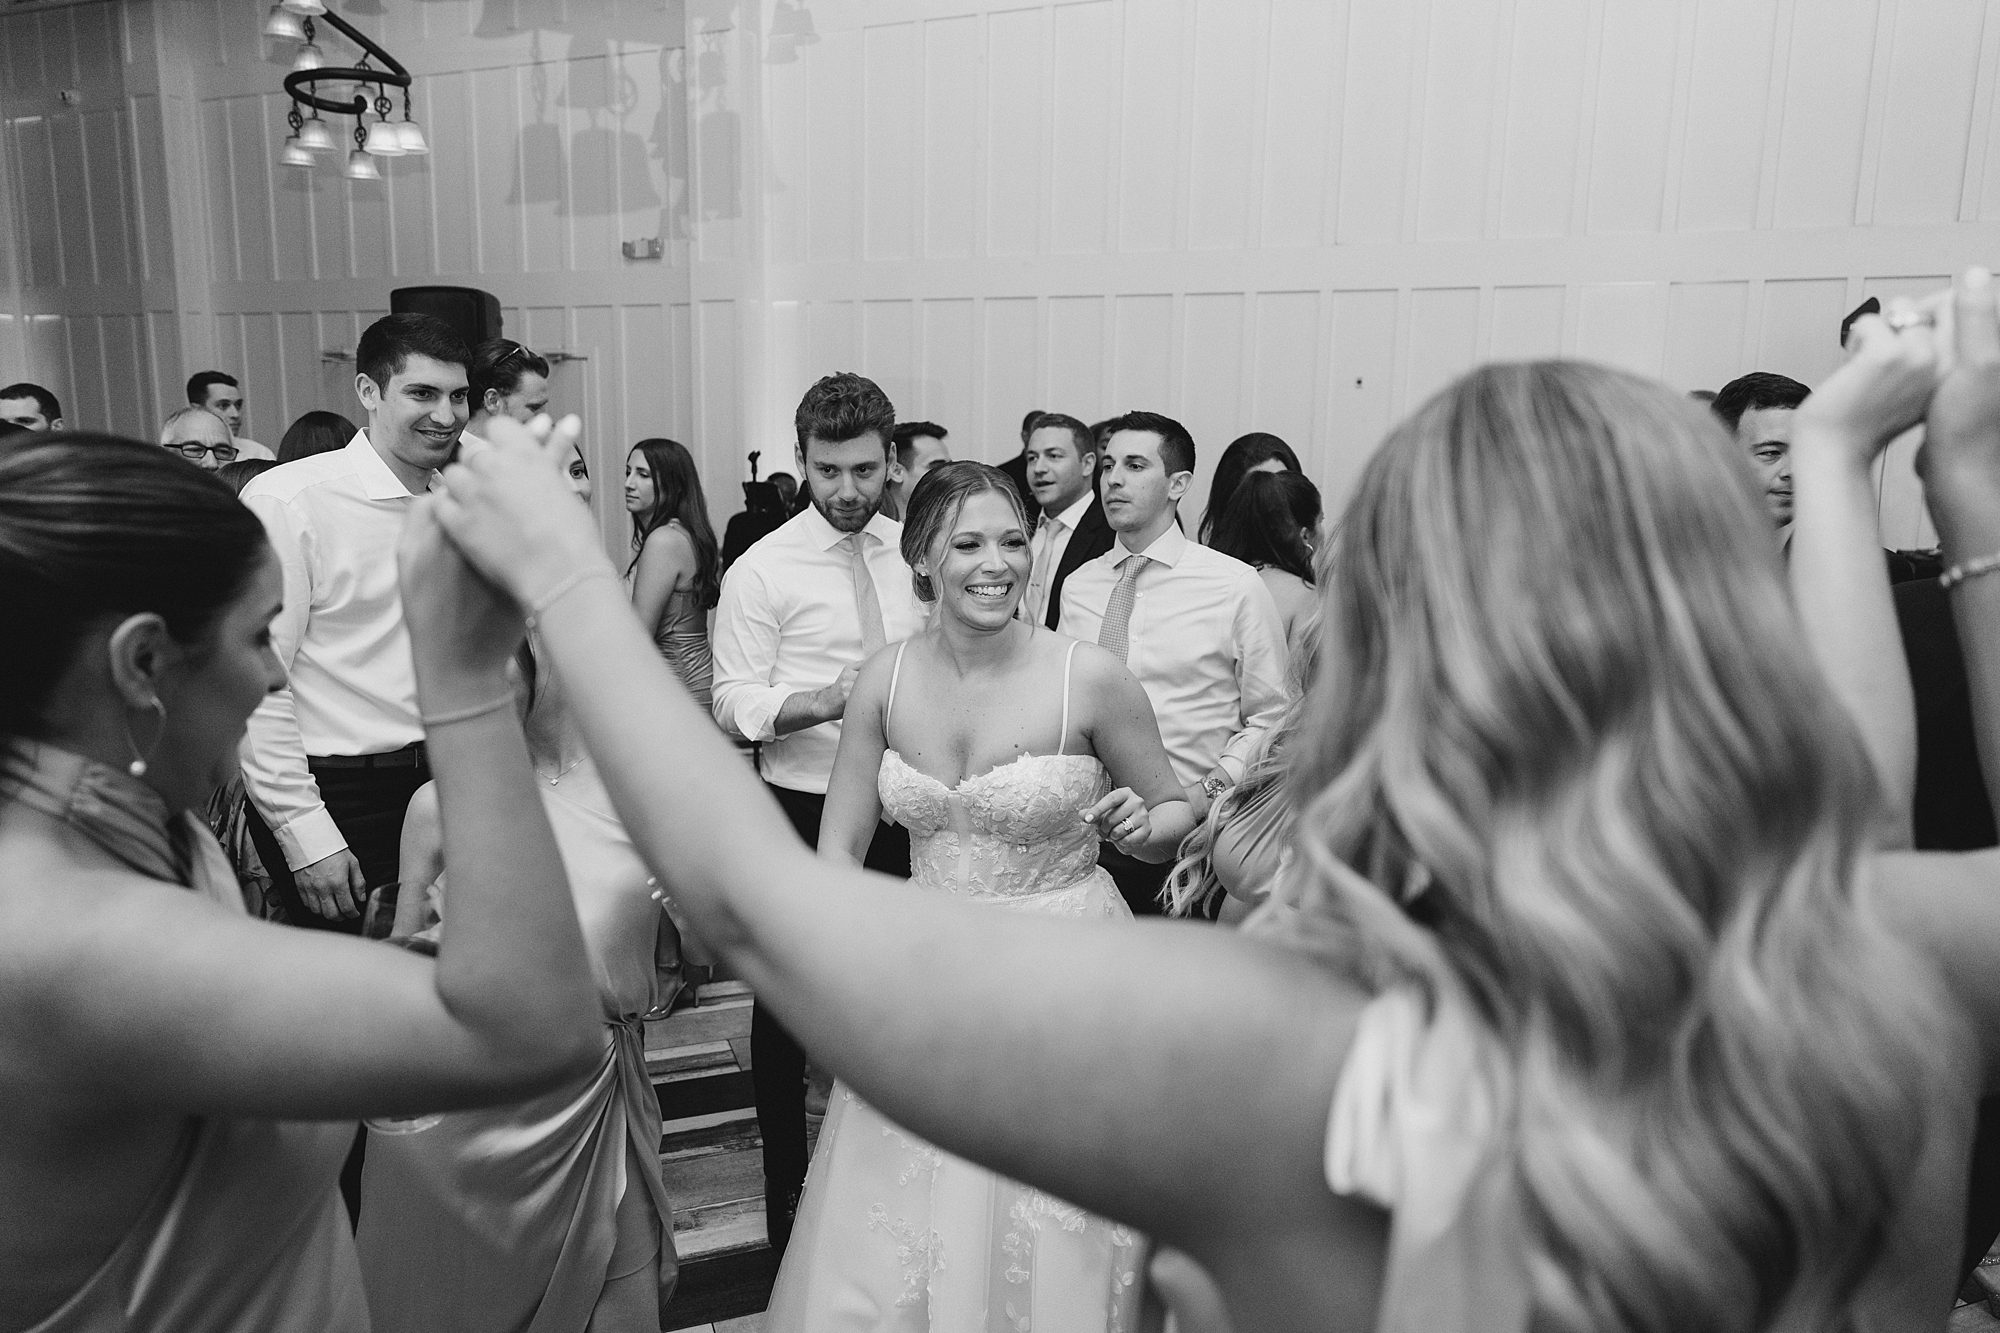 wedding guests dance at wedding recepion 